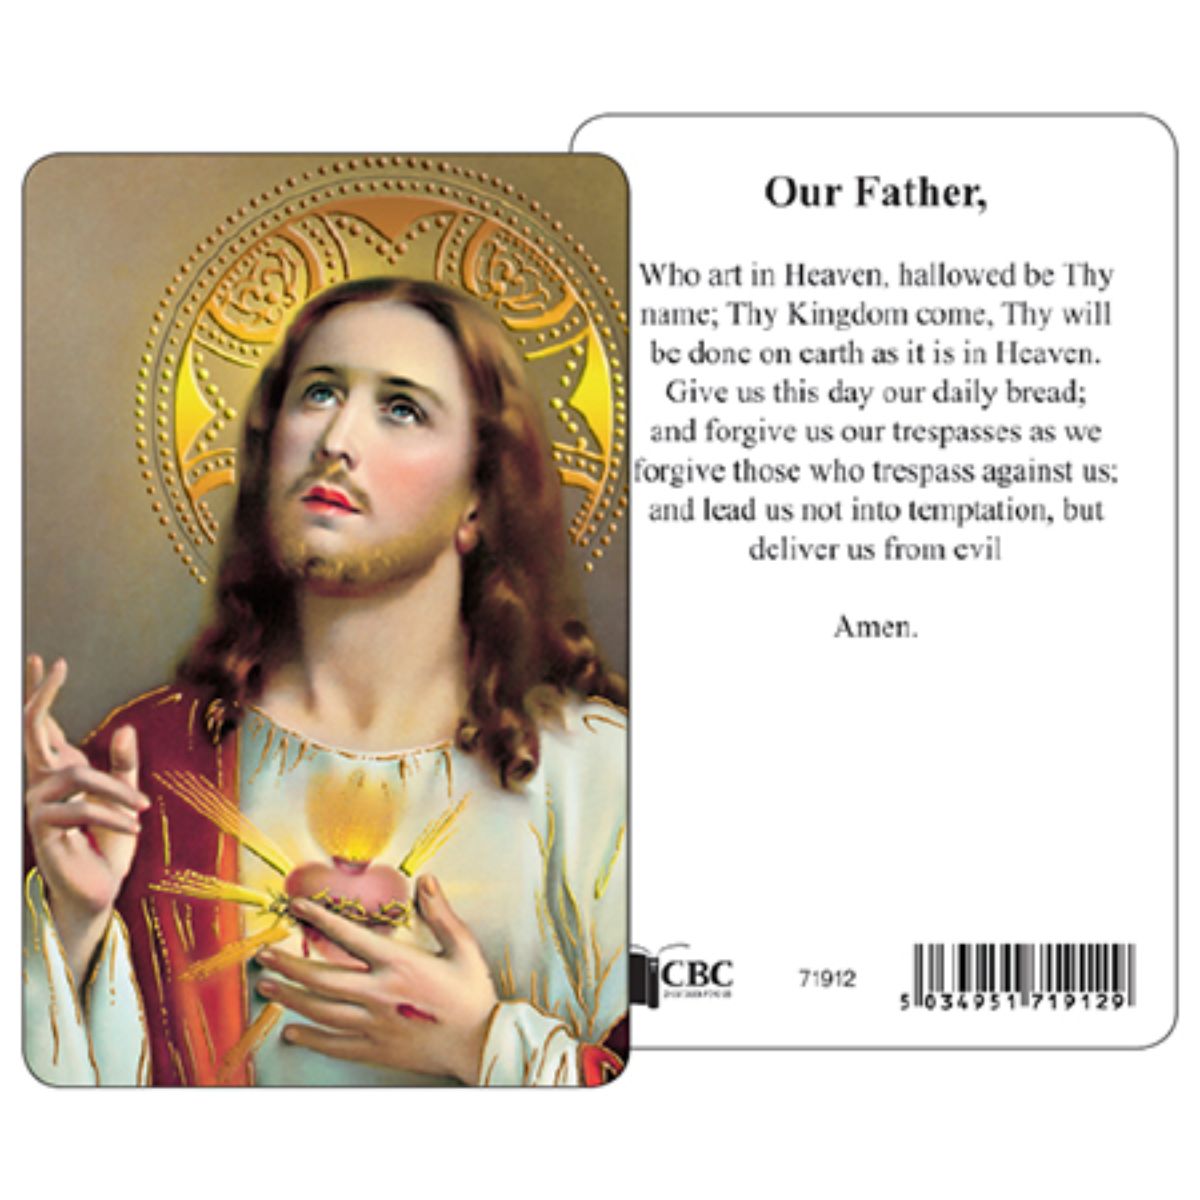 the-lord-s-prayer-matthew-6-9-13-laminated-prayer-card-prayer-cards